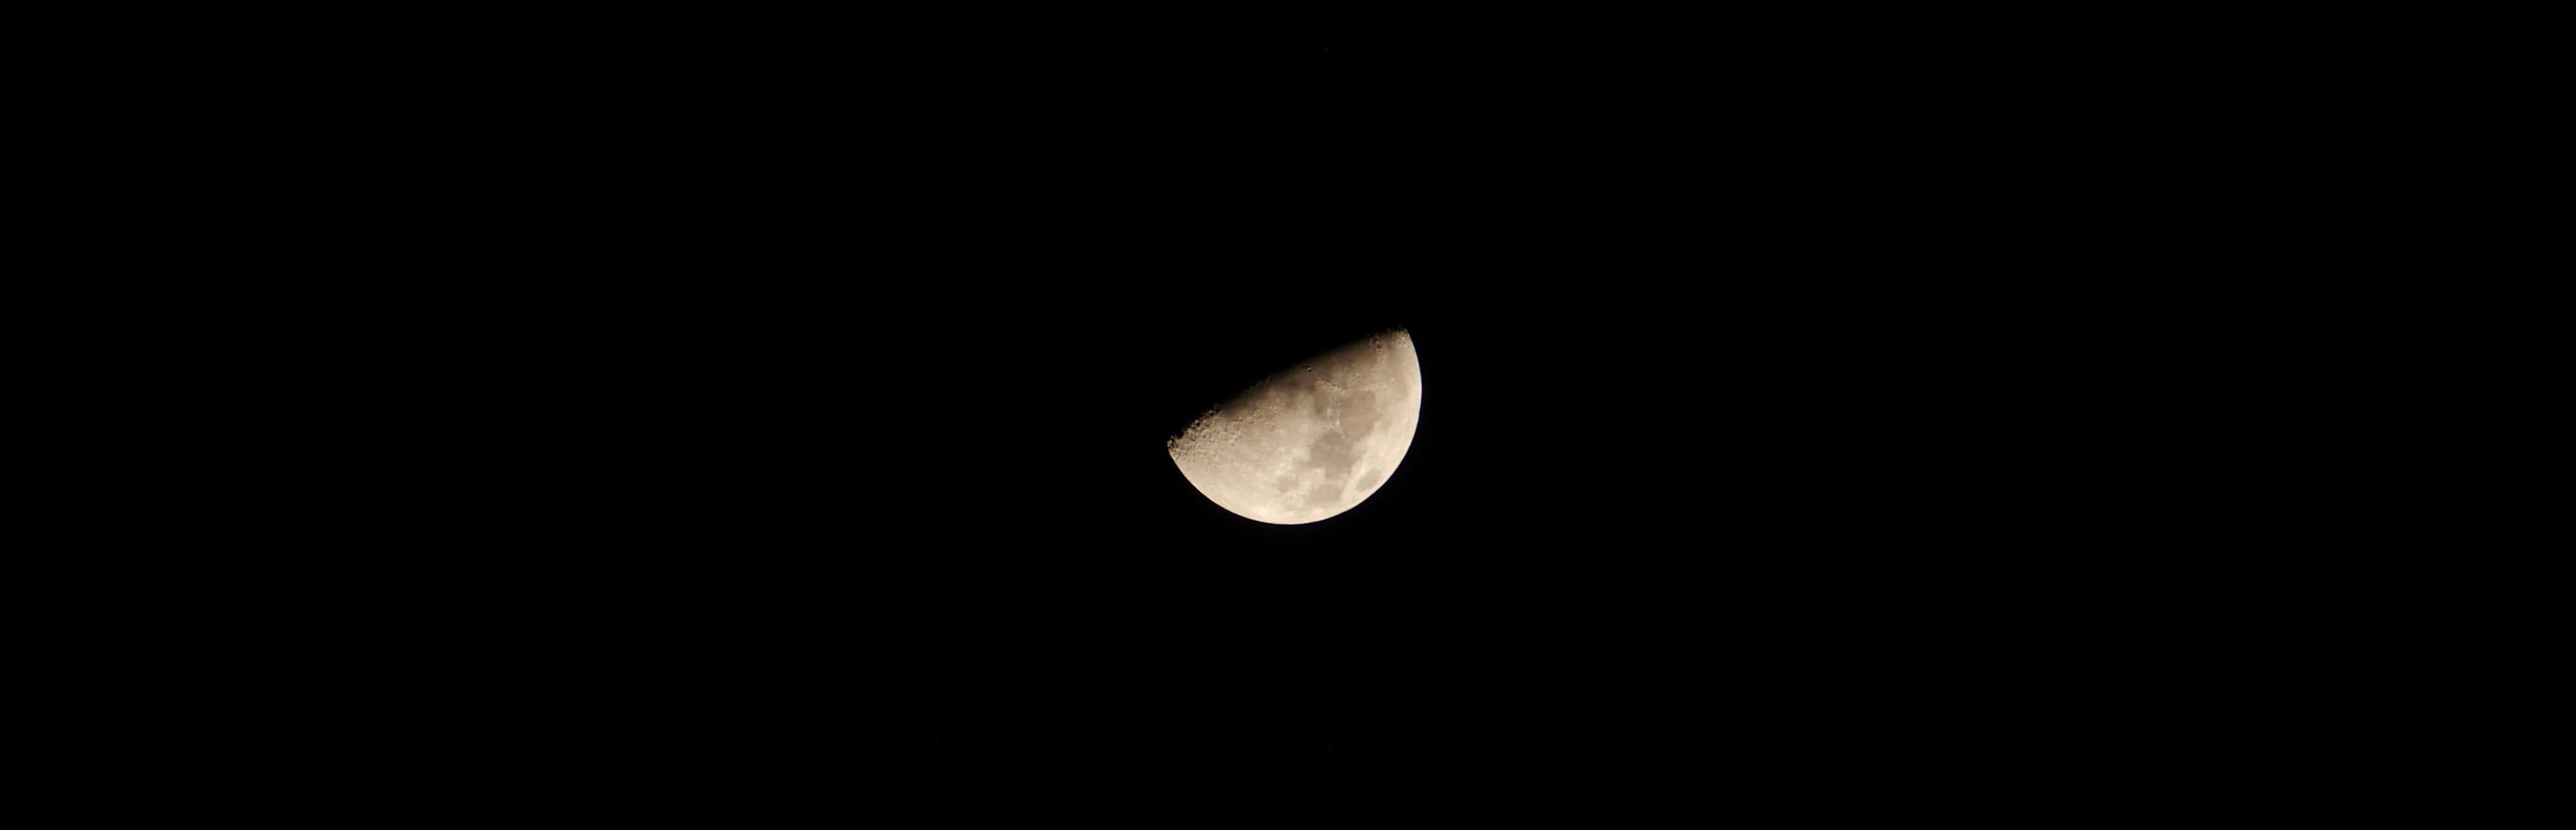 A radiant half-moon illuminated against a brilliant night sky.